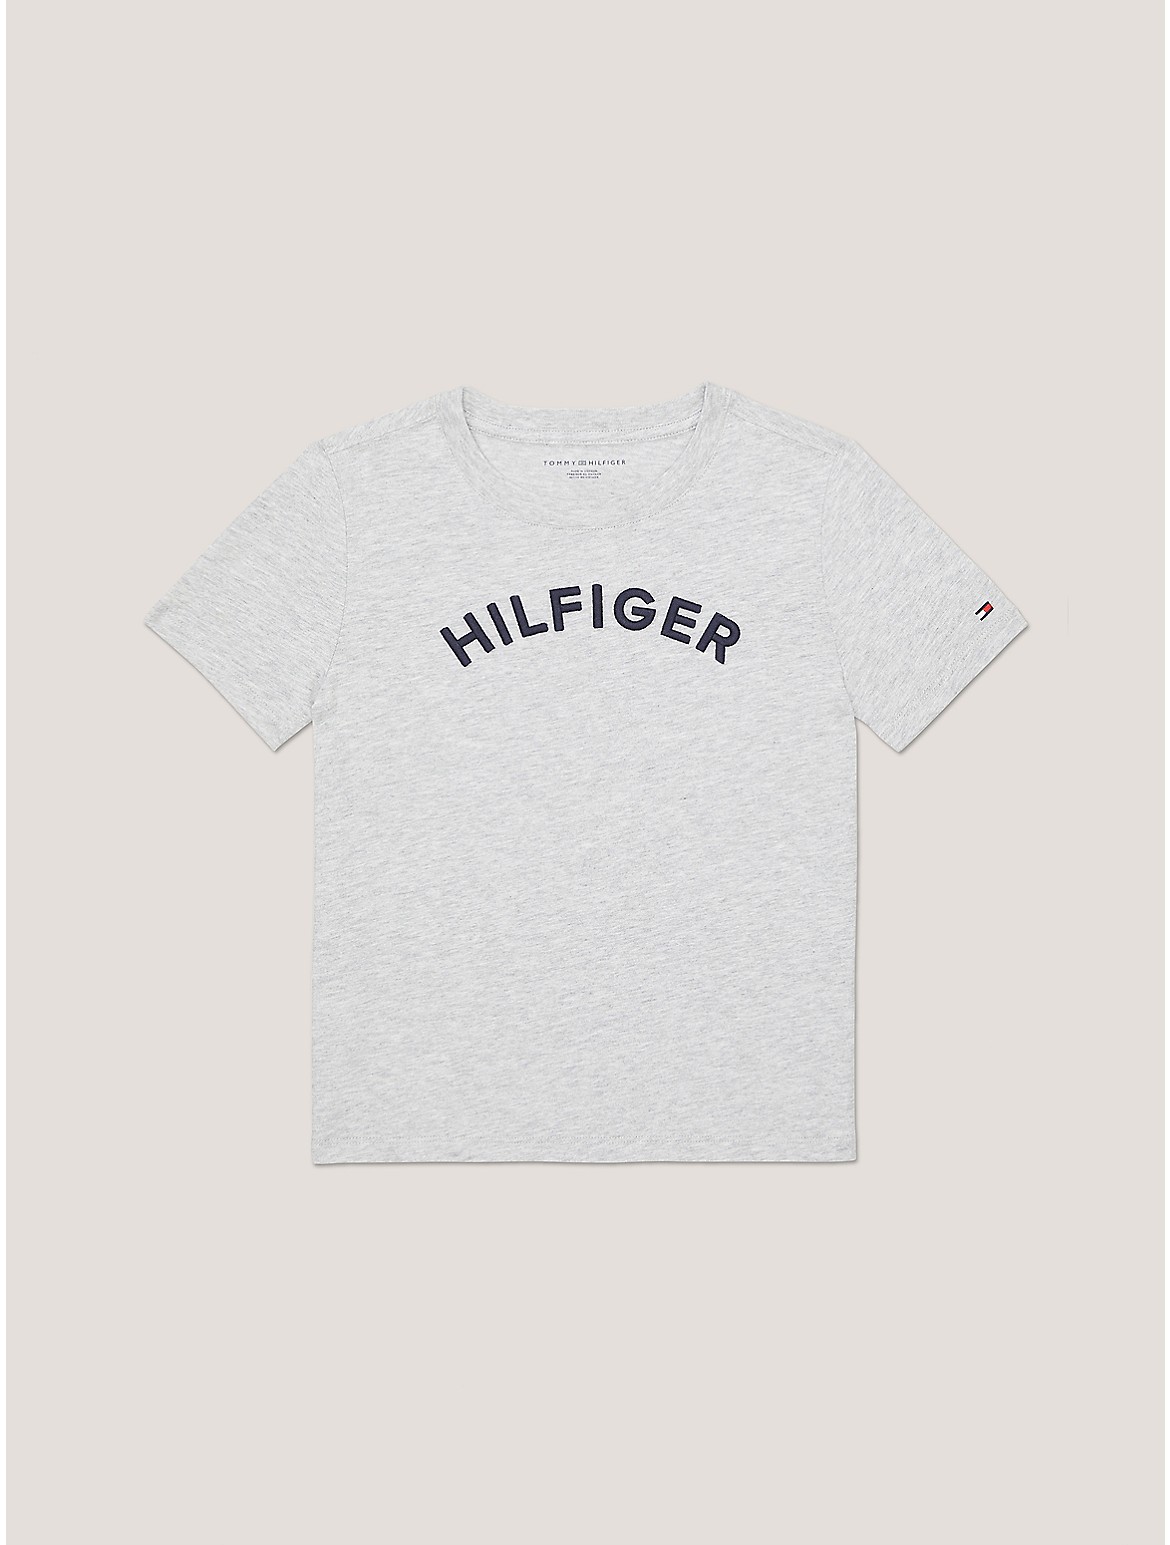 Tommy Hilfiger Boys' Kids' Embroidered Arched Logo T-Shirt